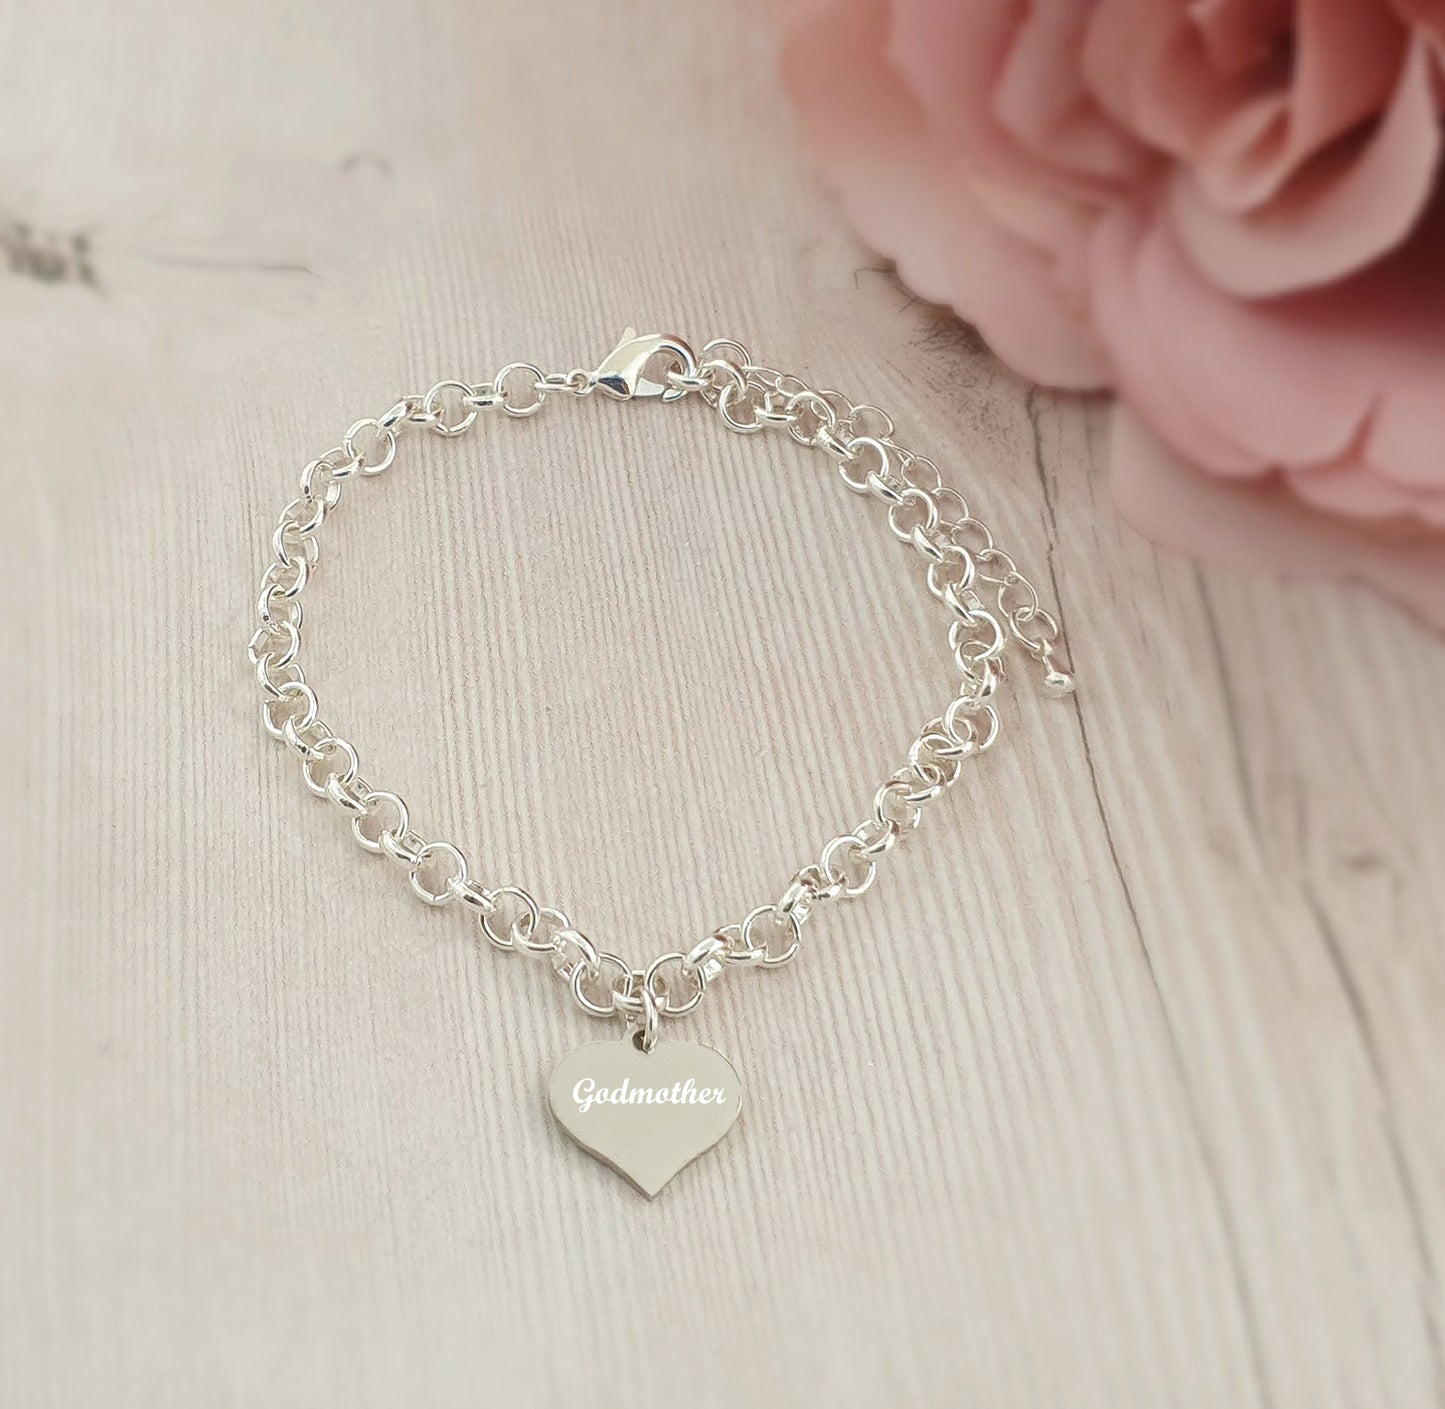 Godmother Engraved Heart Charm Link Bracelet, Gift for Women